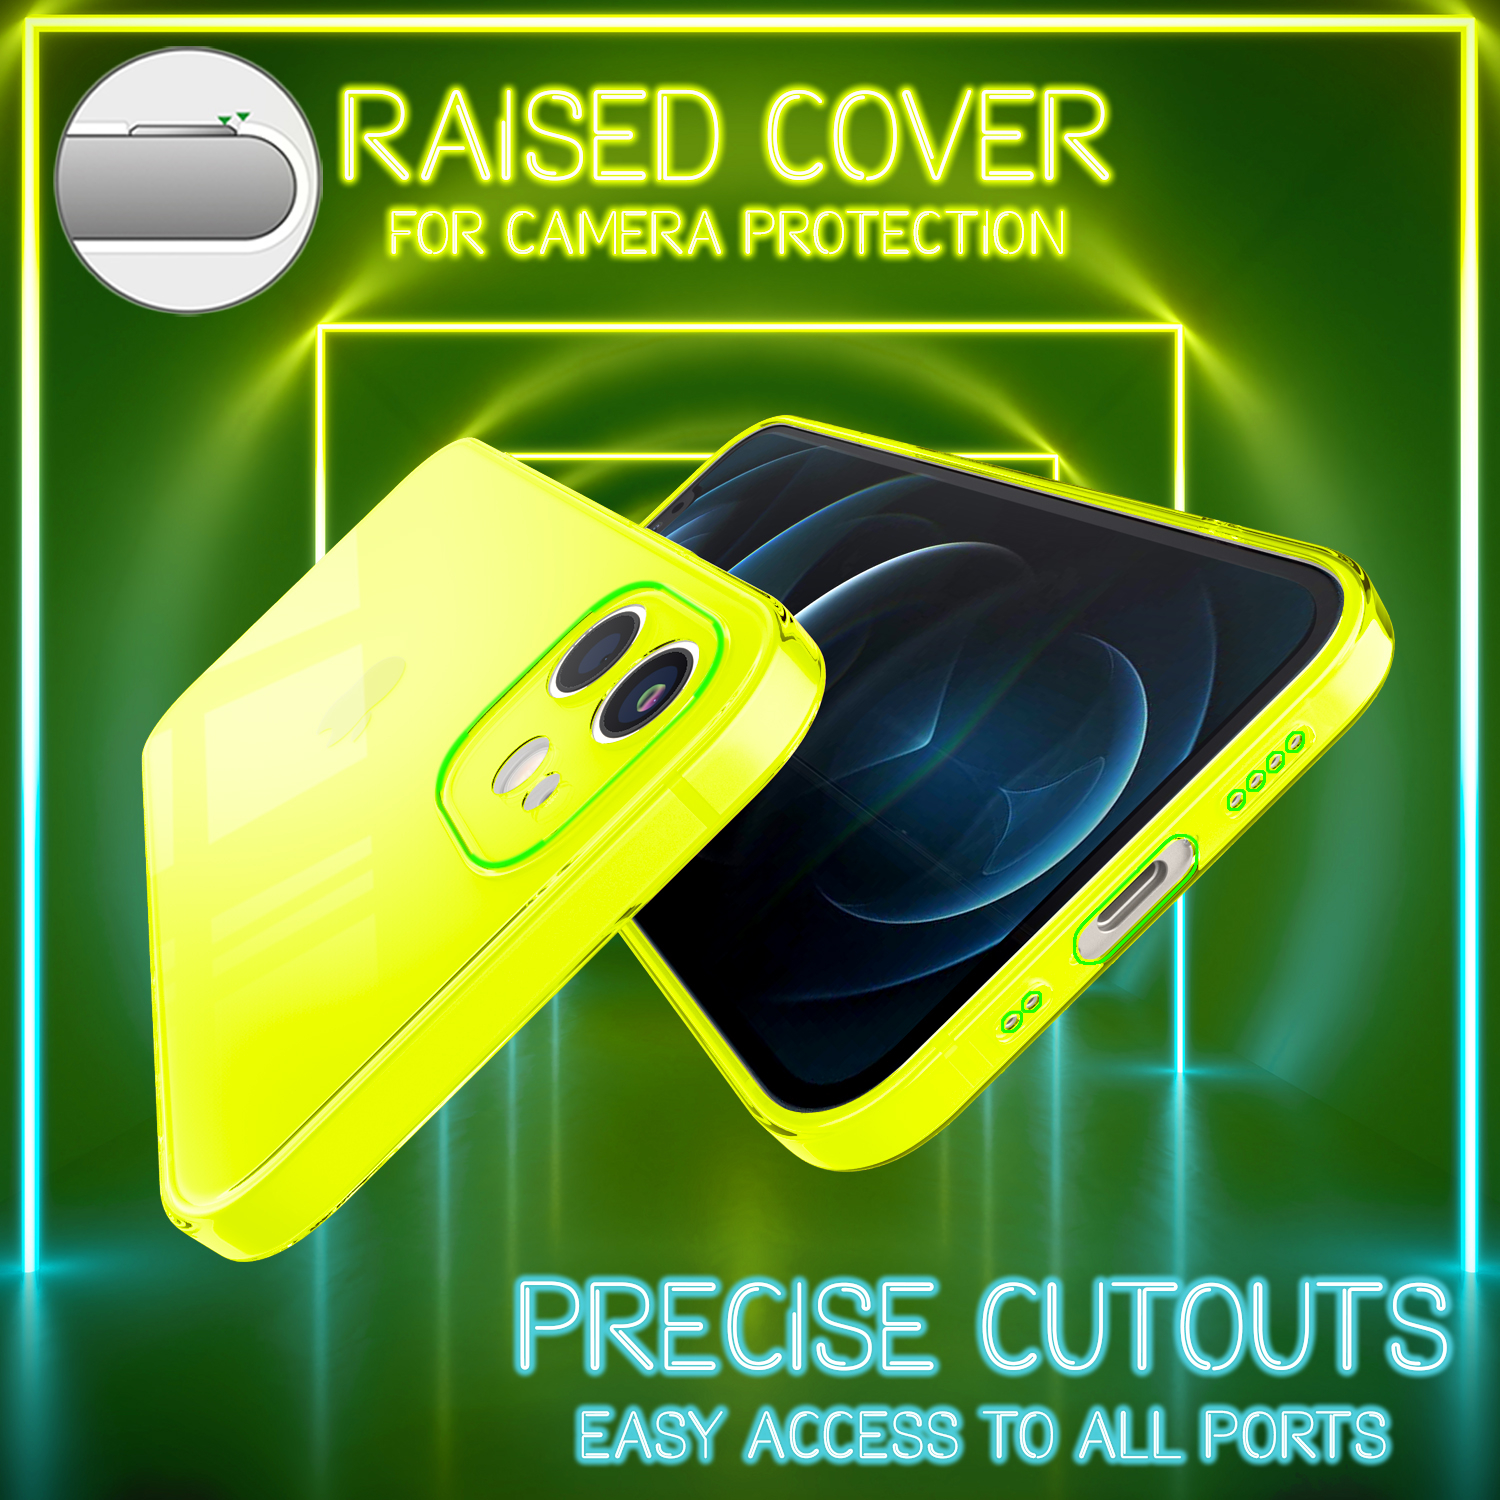 NALIA Klar Gelb Transparente Silikon Mini, 12 iPhone Hülle, Neon Backcover, Apple